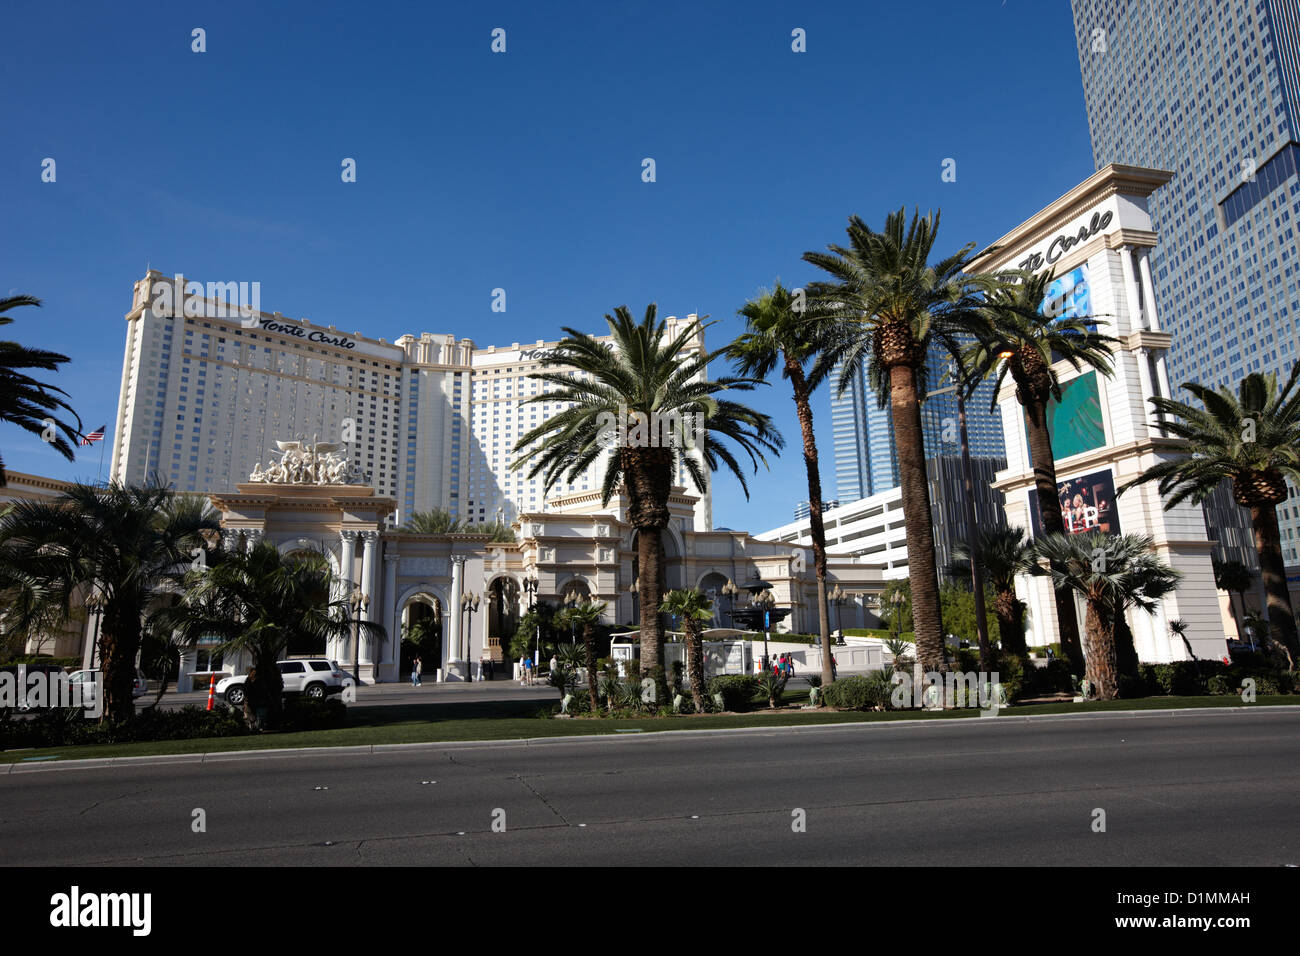 the monte carlo hotel and casino on Las Vegas boulevard south Nevada USA Stock Photo